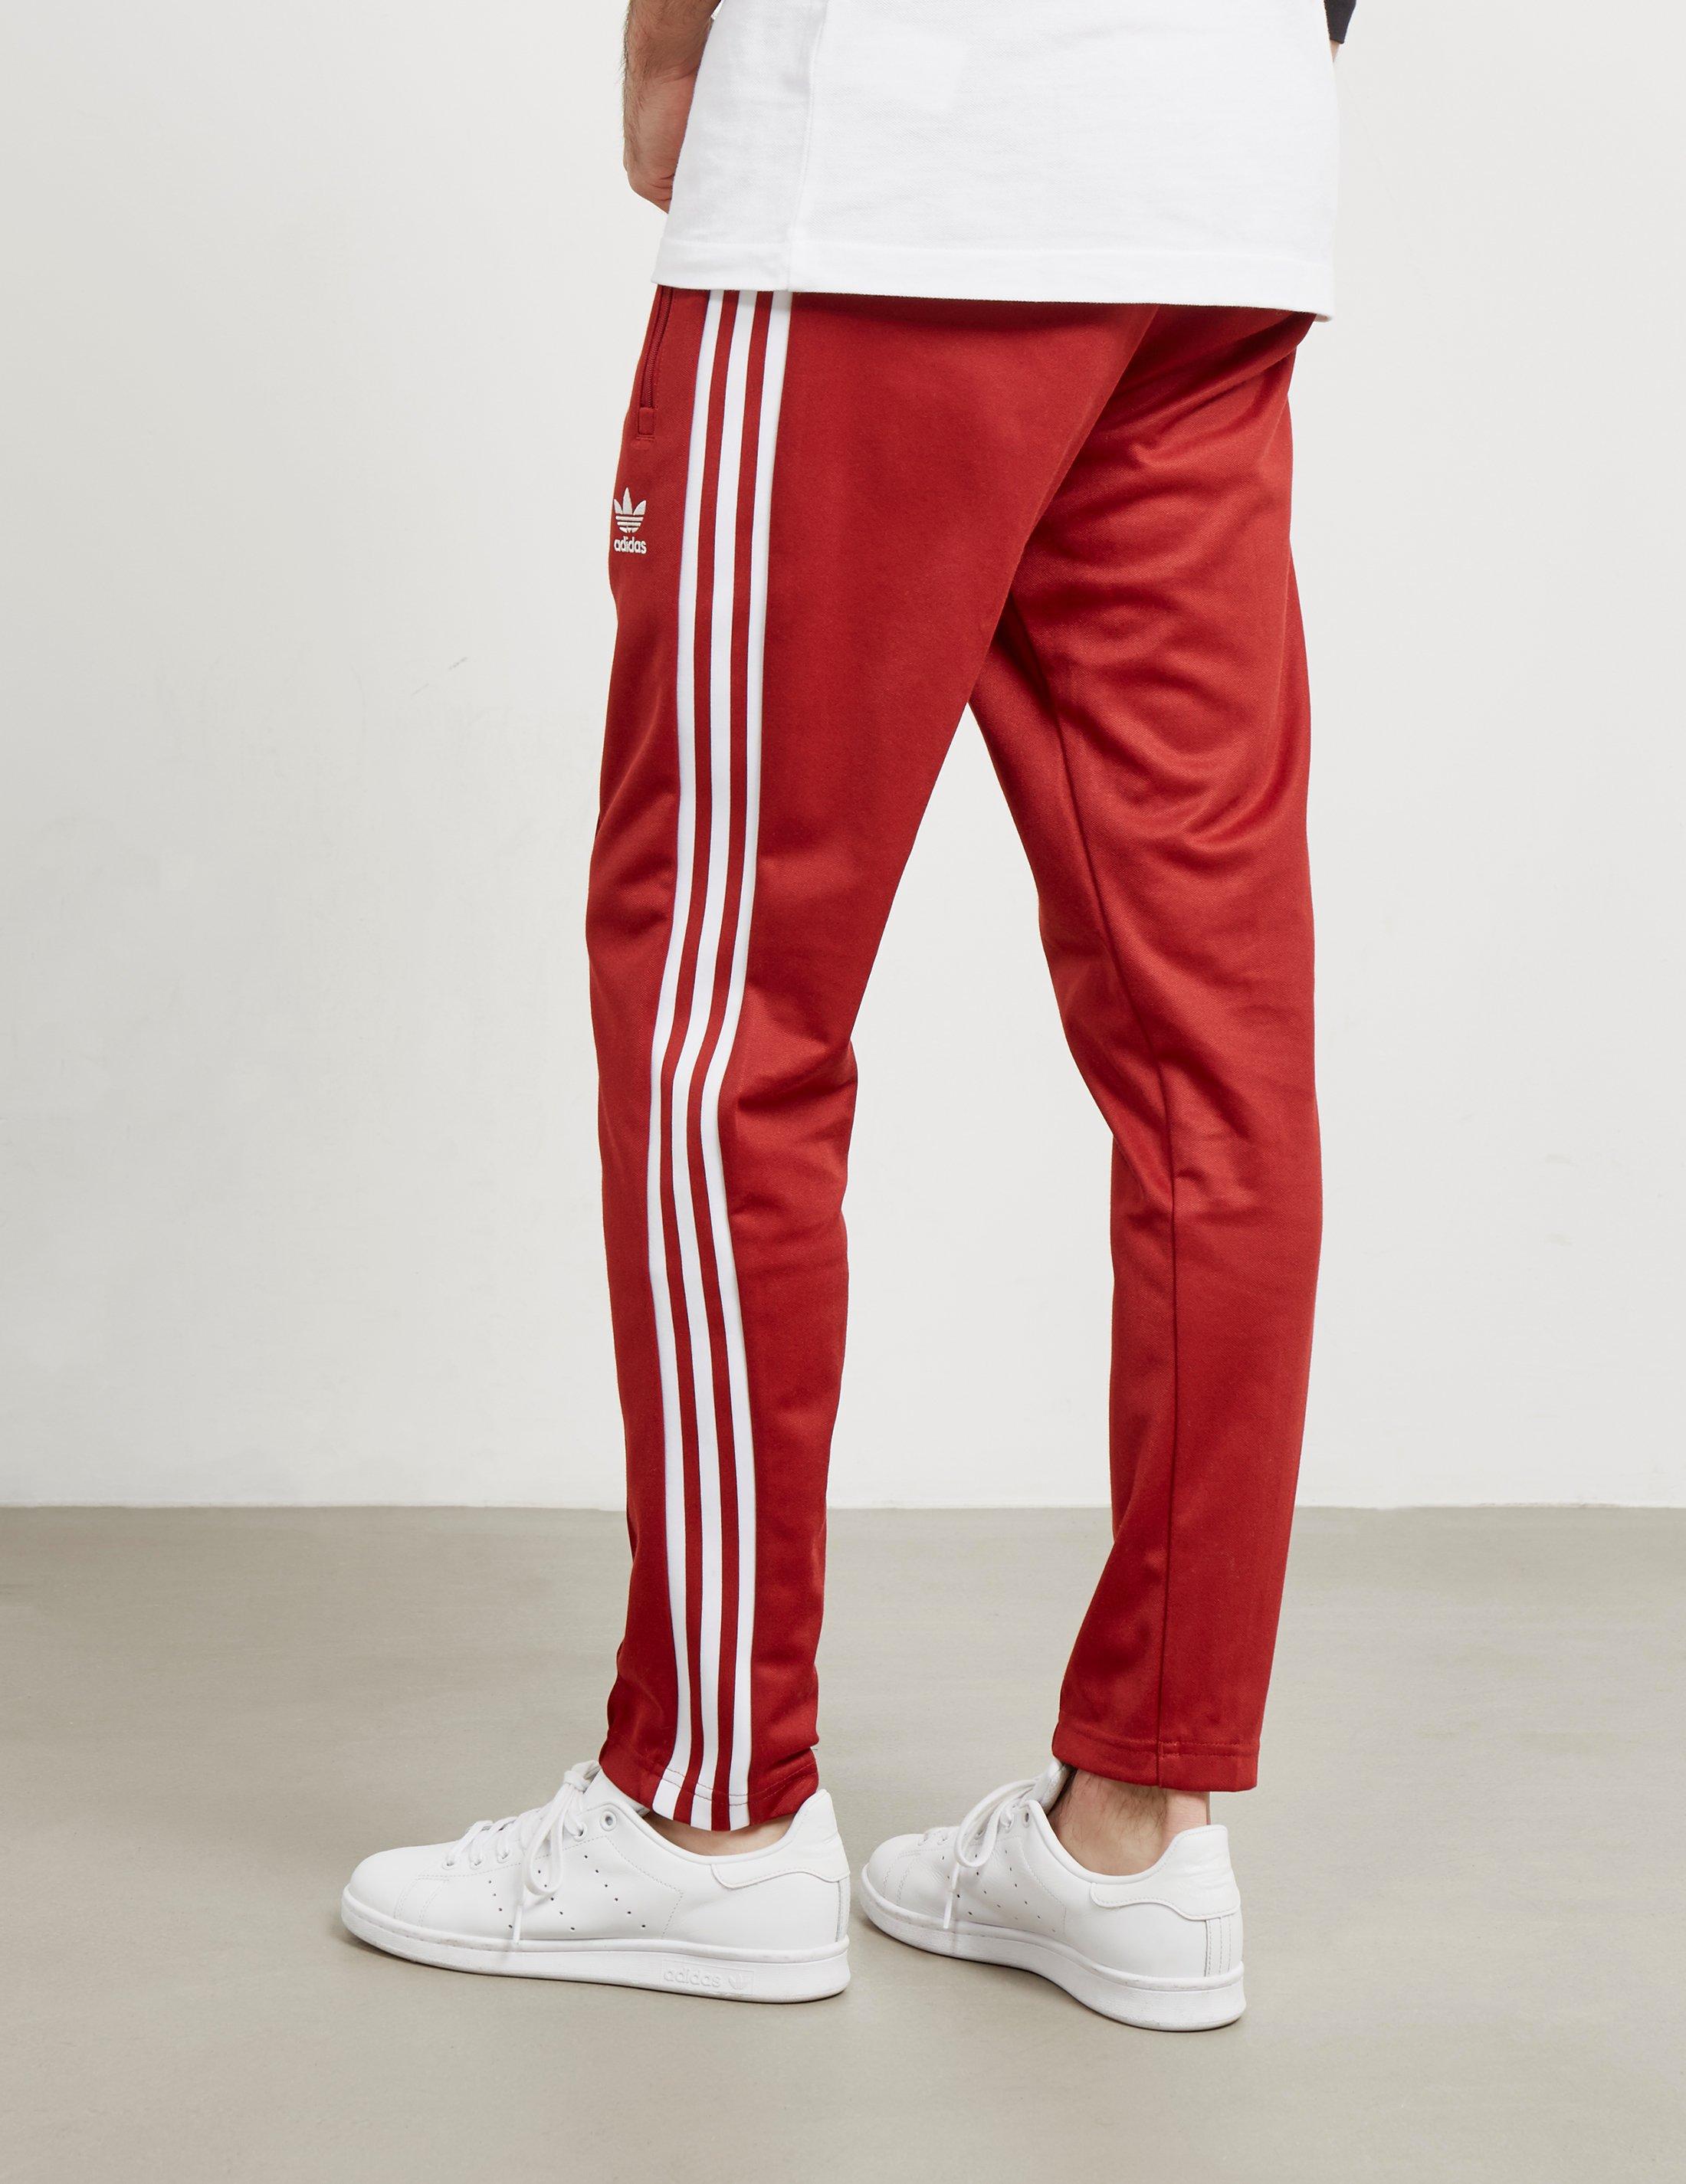 Mens Red Adidas Track Pants